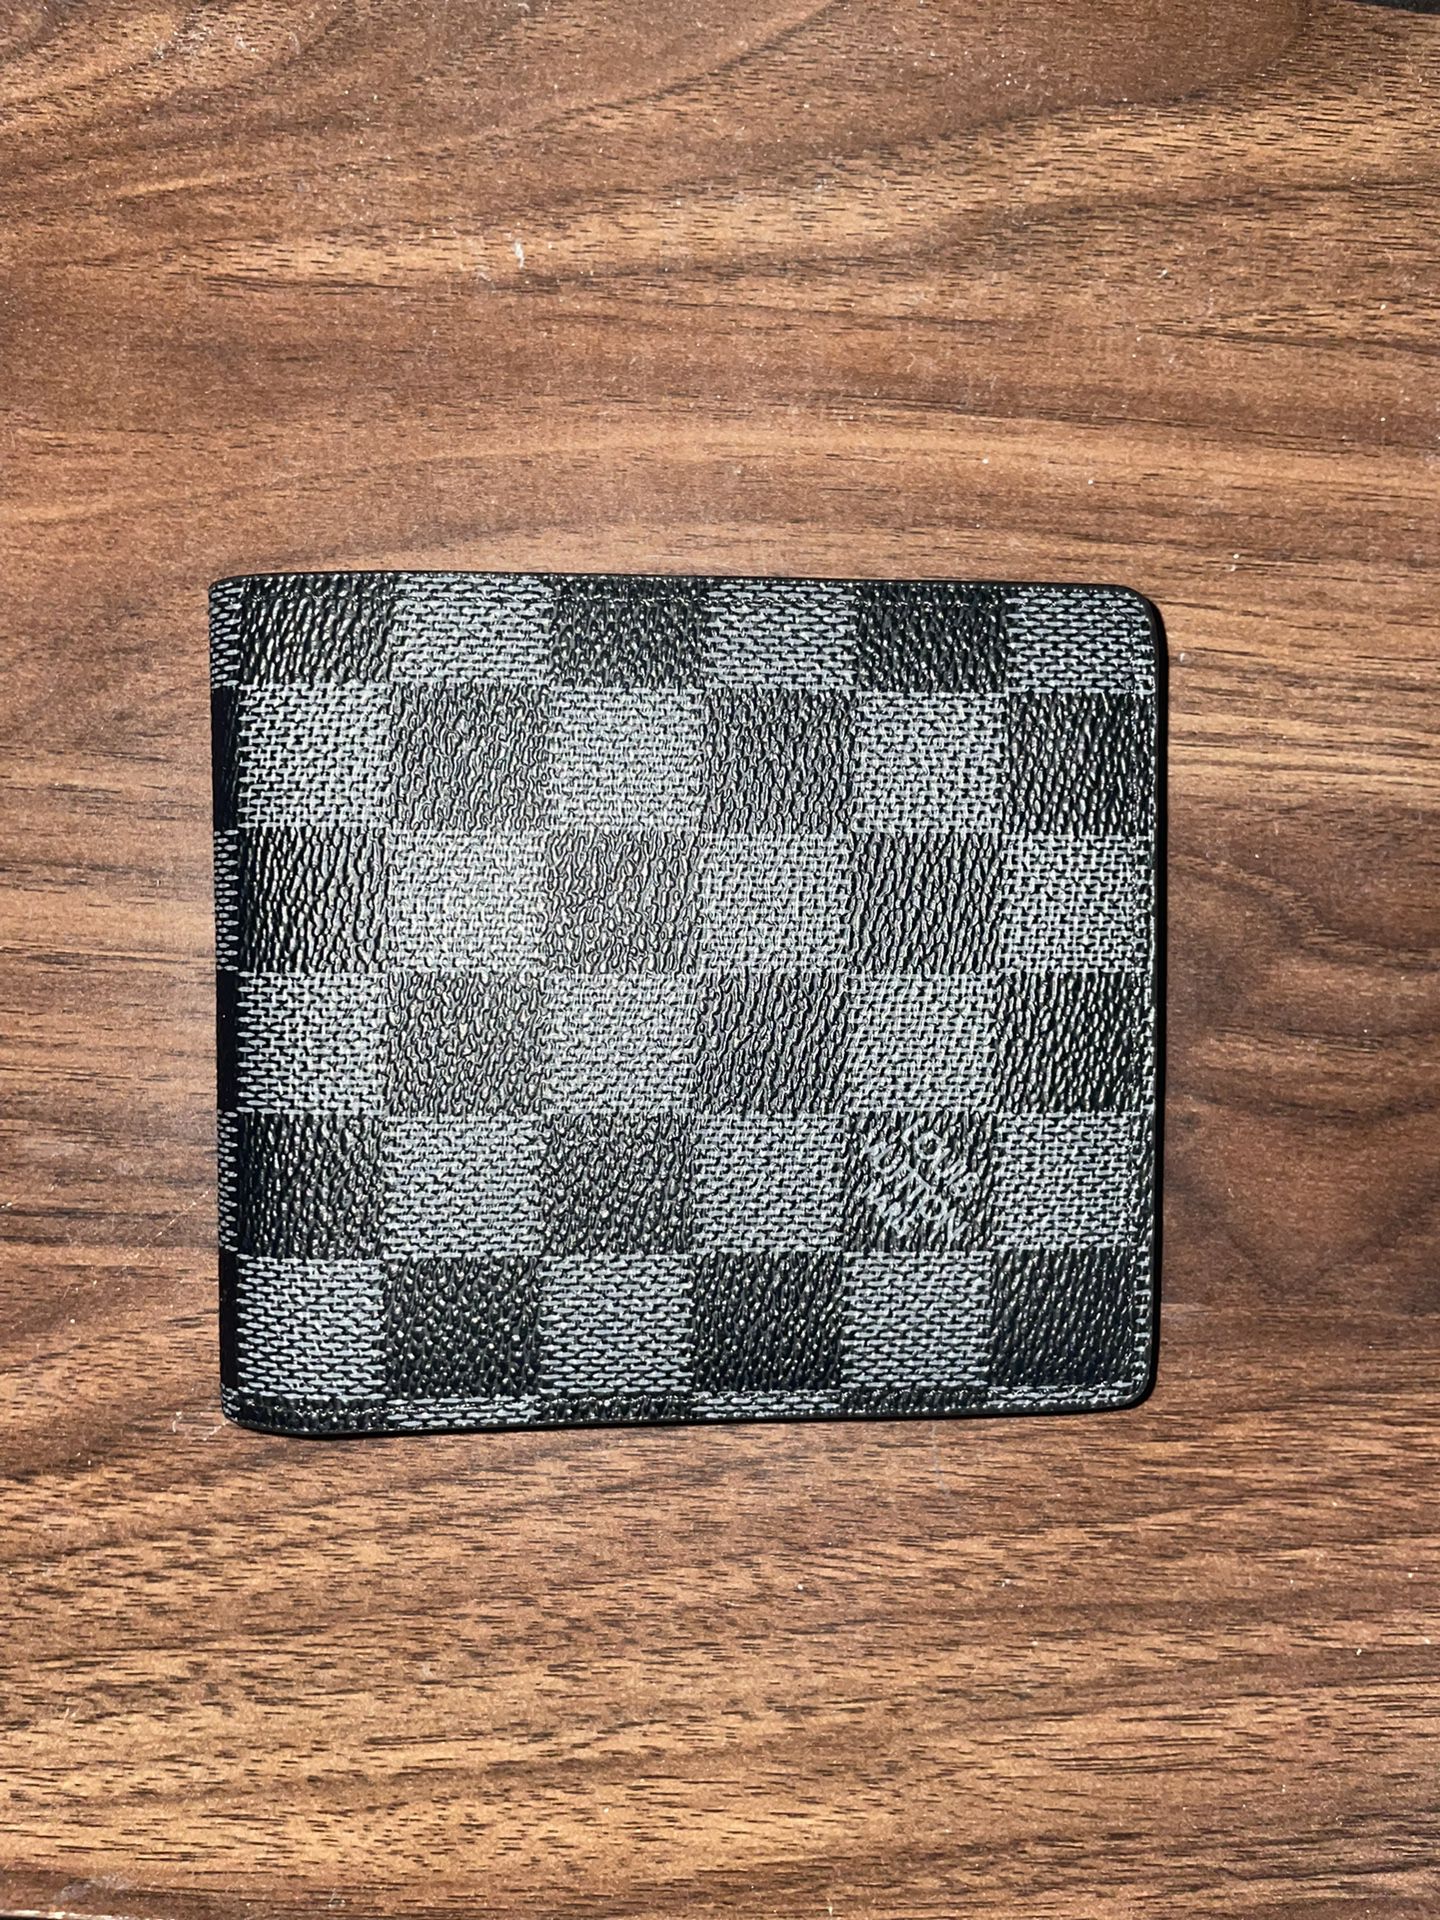 XL Louis Vuitton Wallet